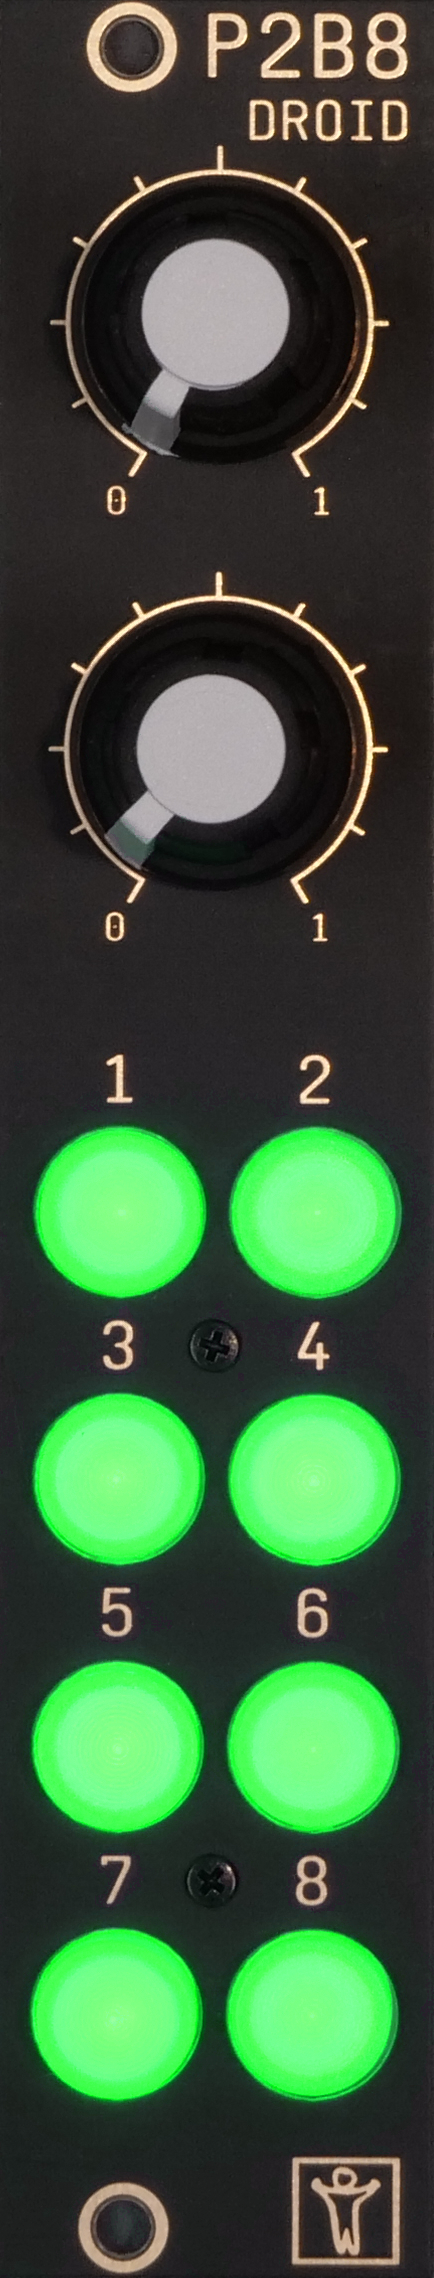 P2B8 Controller mit grünen LEDs